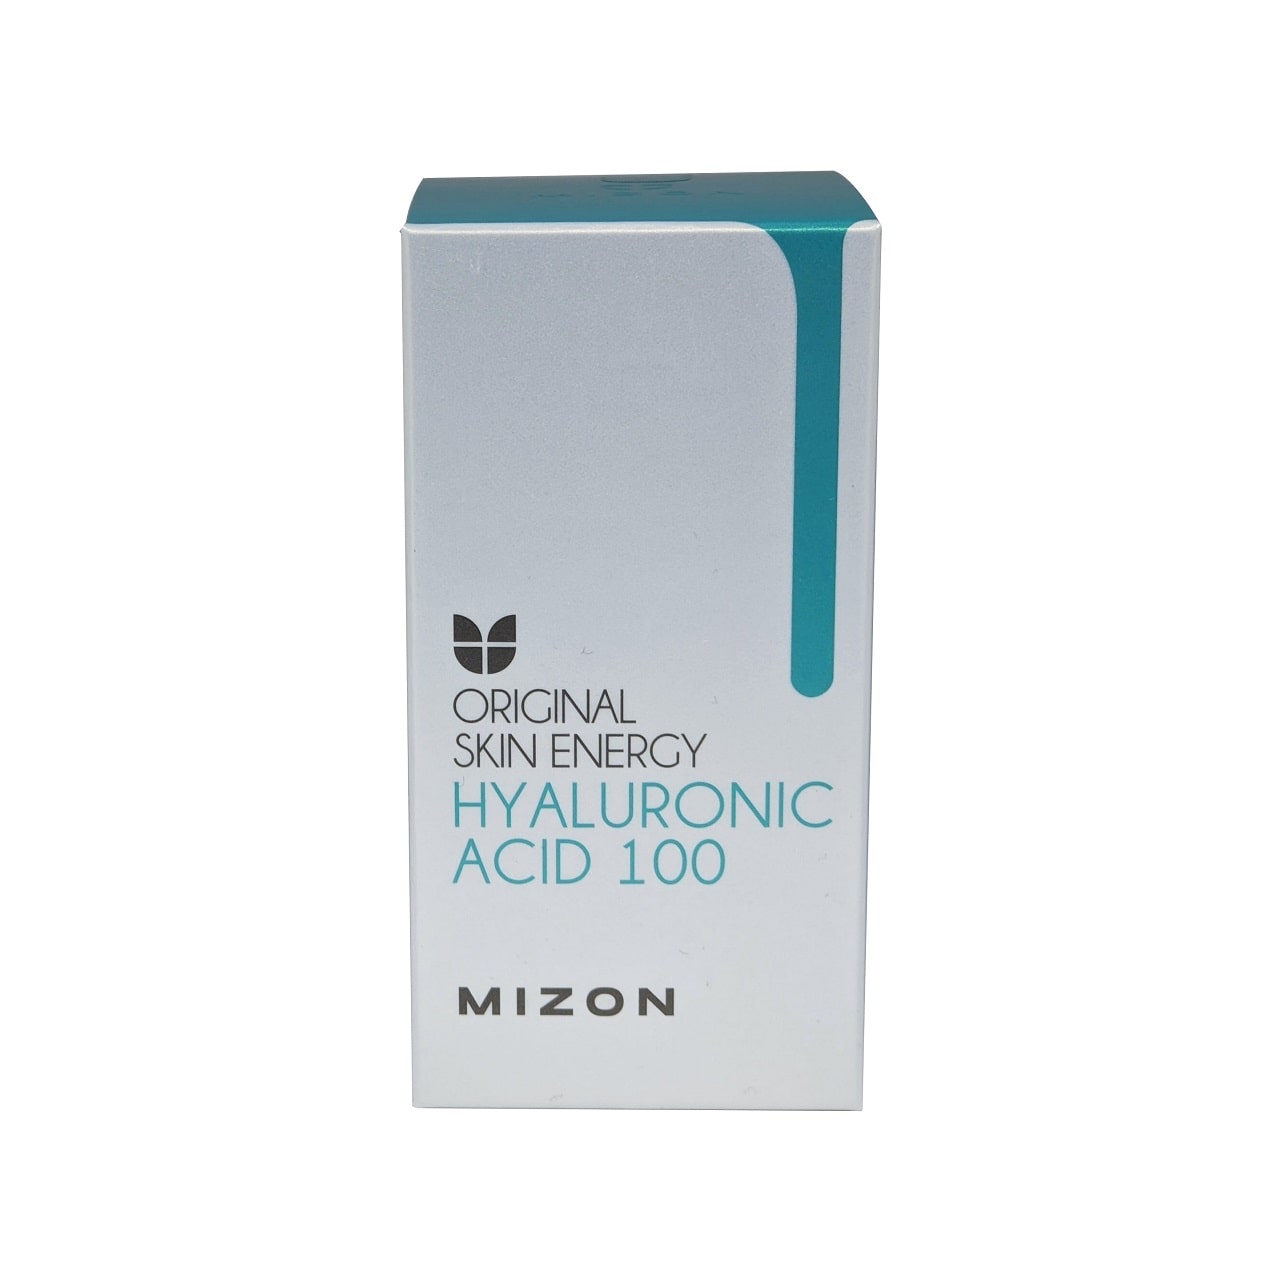 Product label for Mizon Hyaluronic Acid 100 Facial Serum